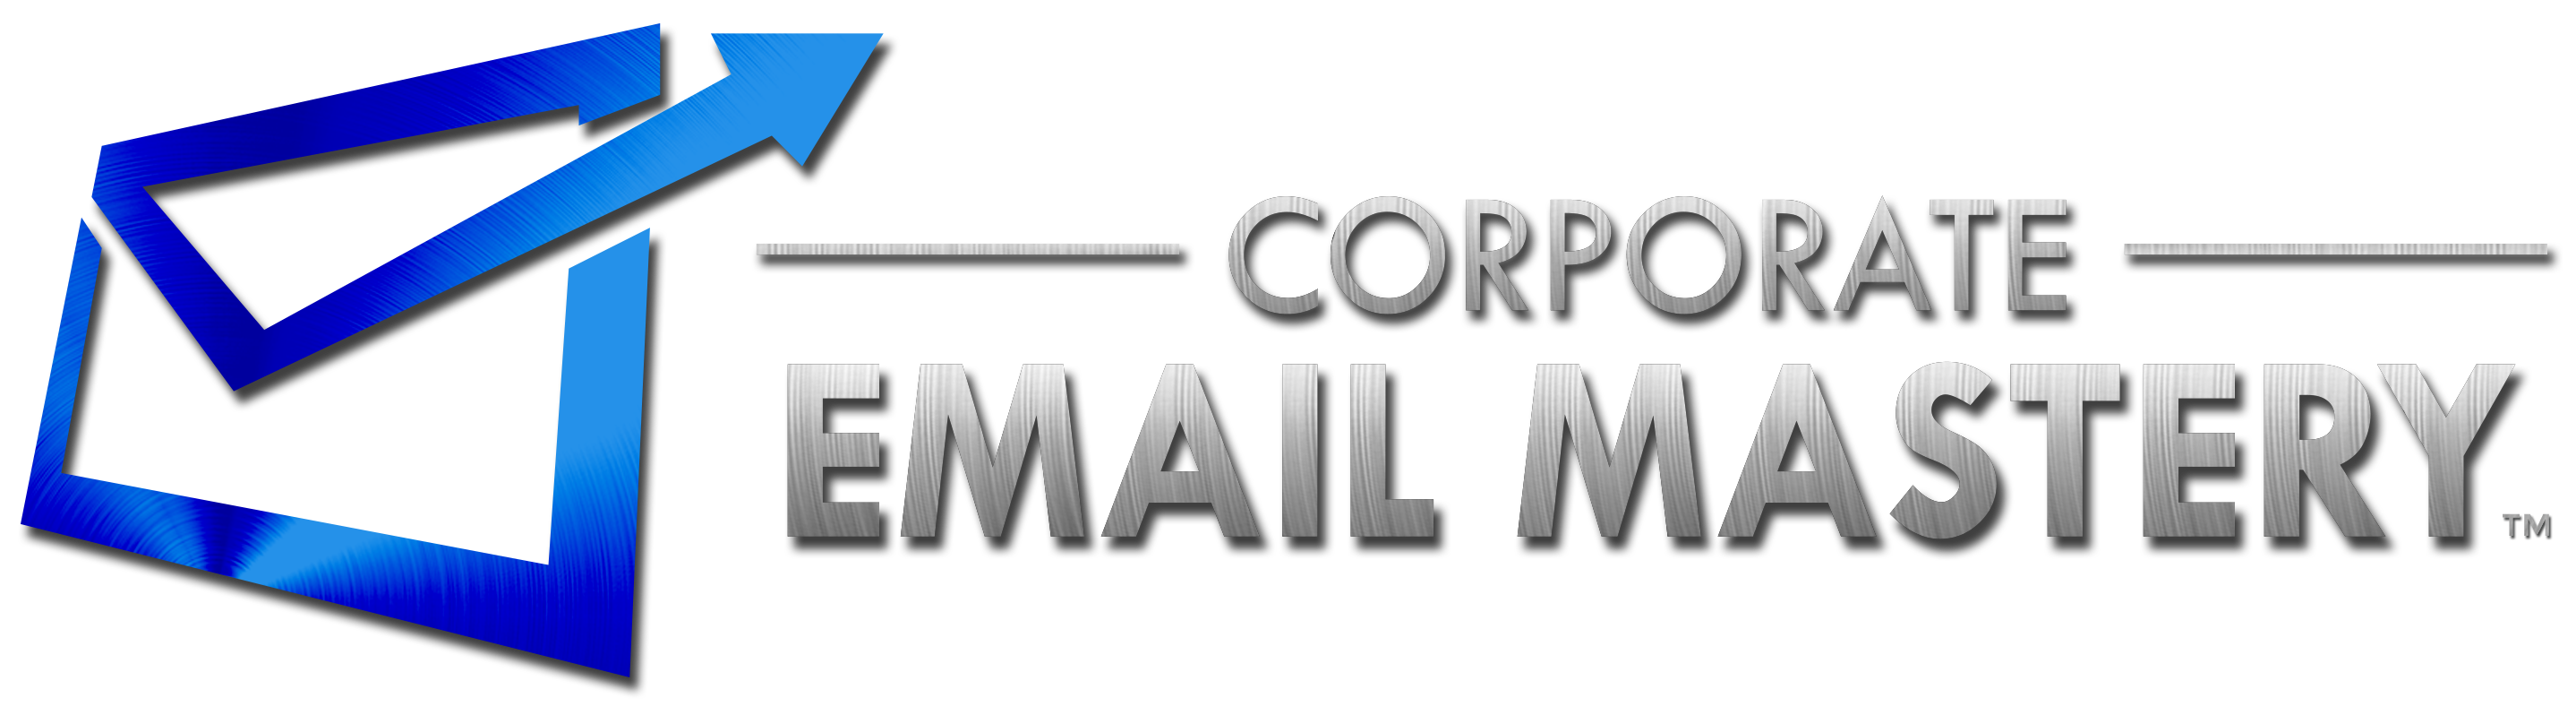 2018_08_31-Corporate-Email-Mastery-Logo-Horizontal